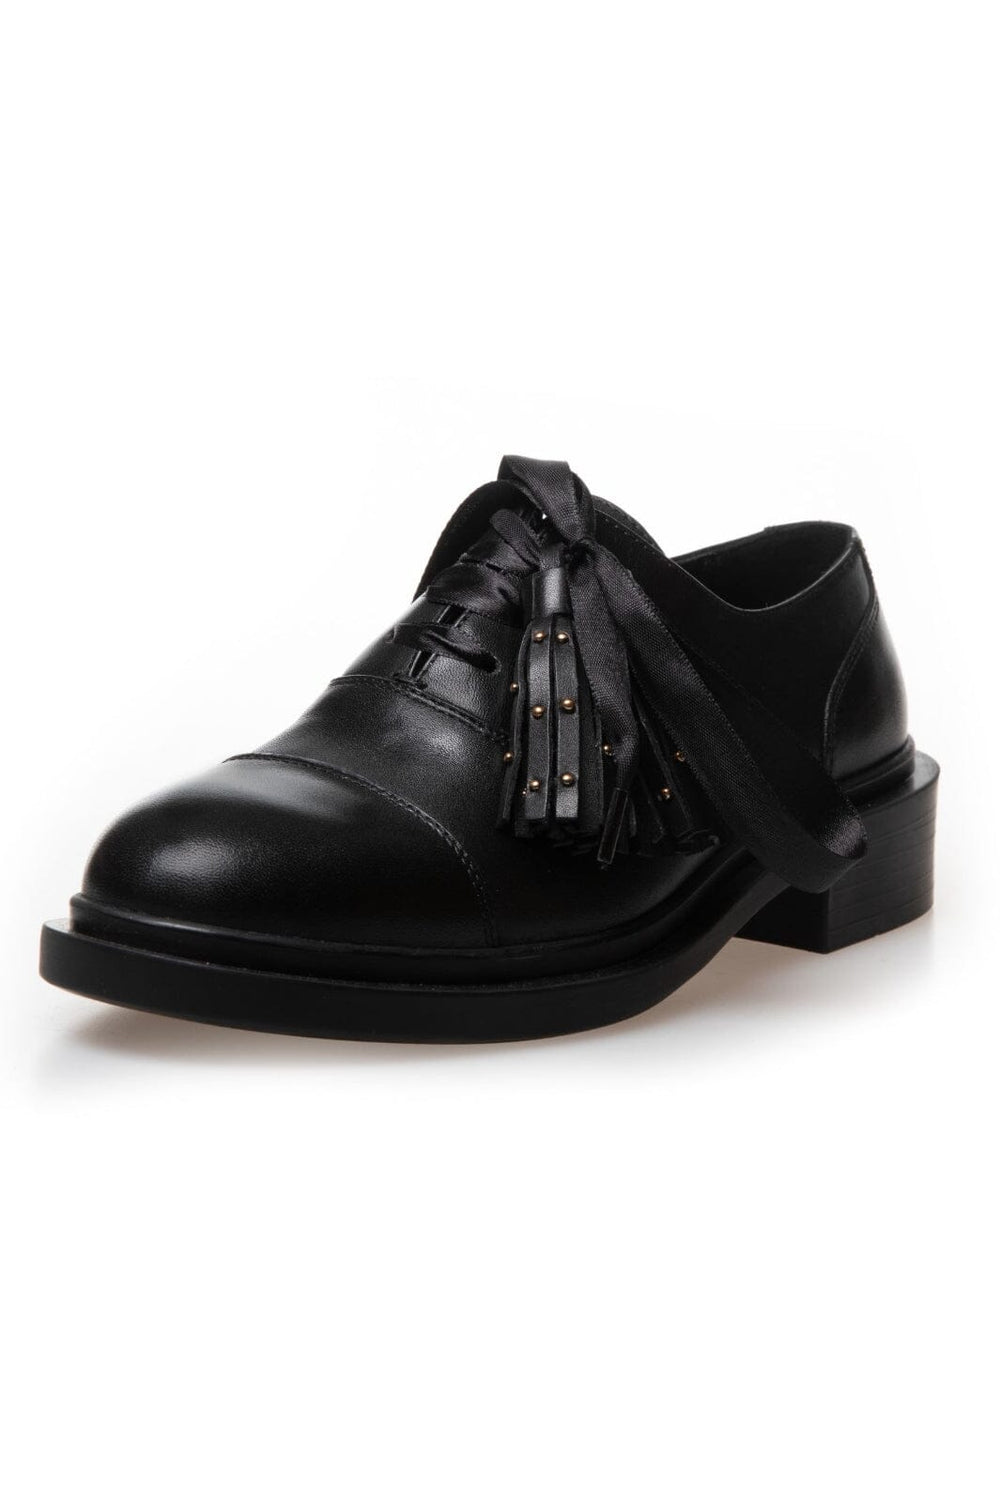 Copenhagen Shoes - Lead Me To You - 0001 Black Sko 